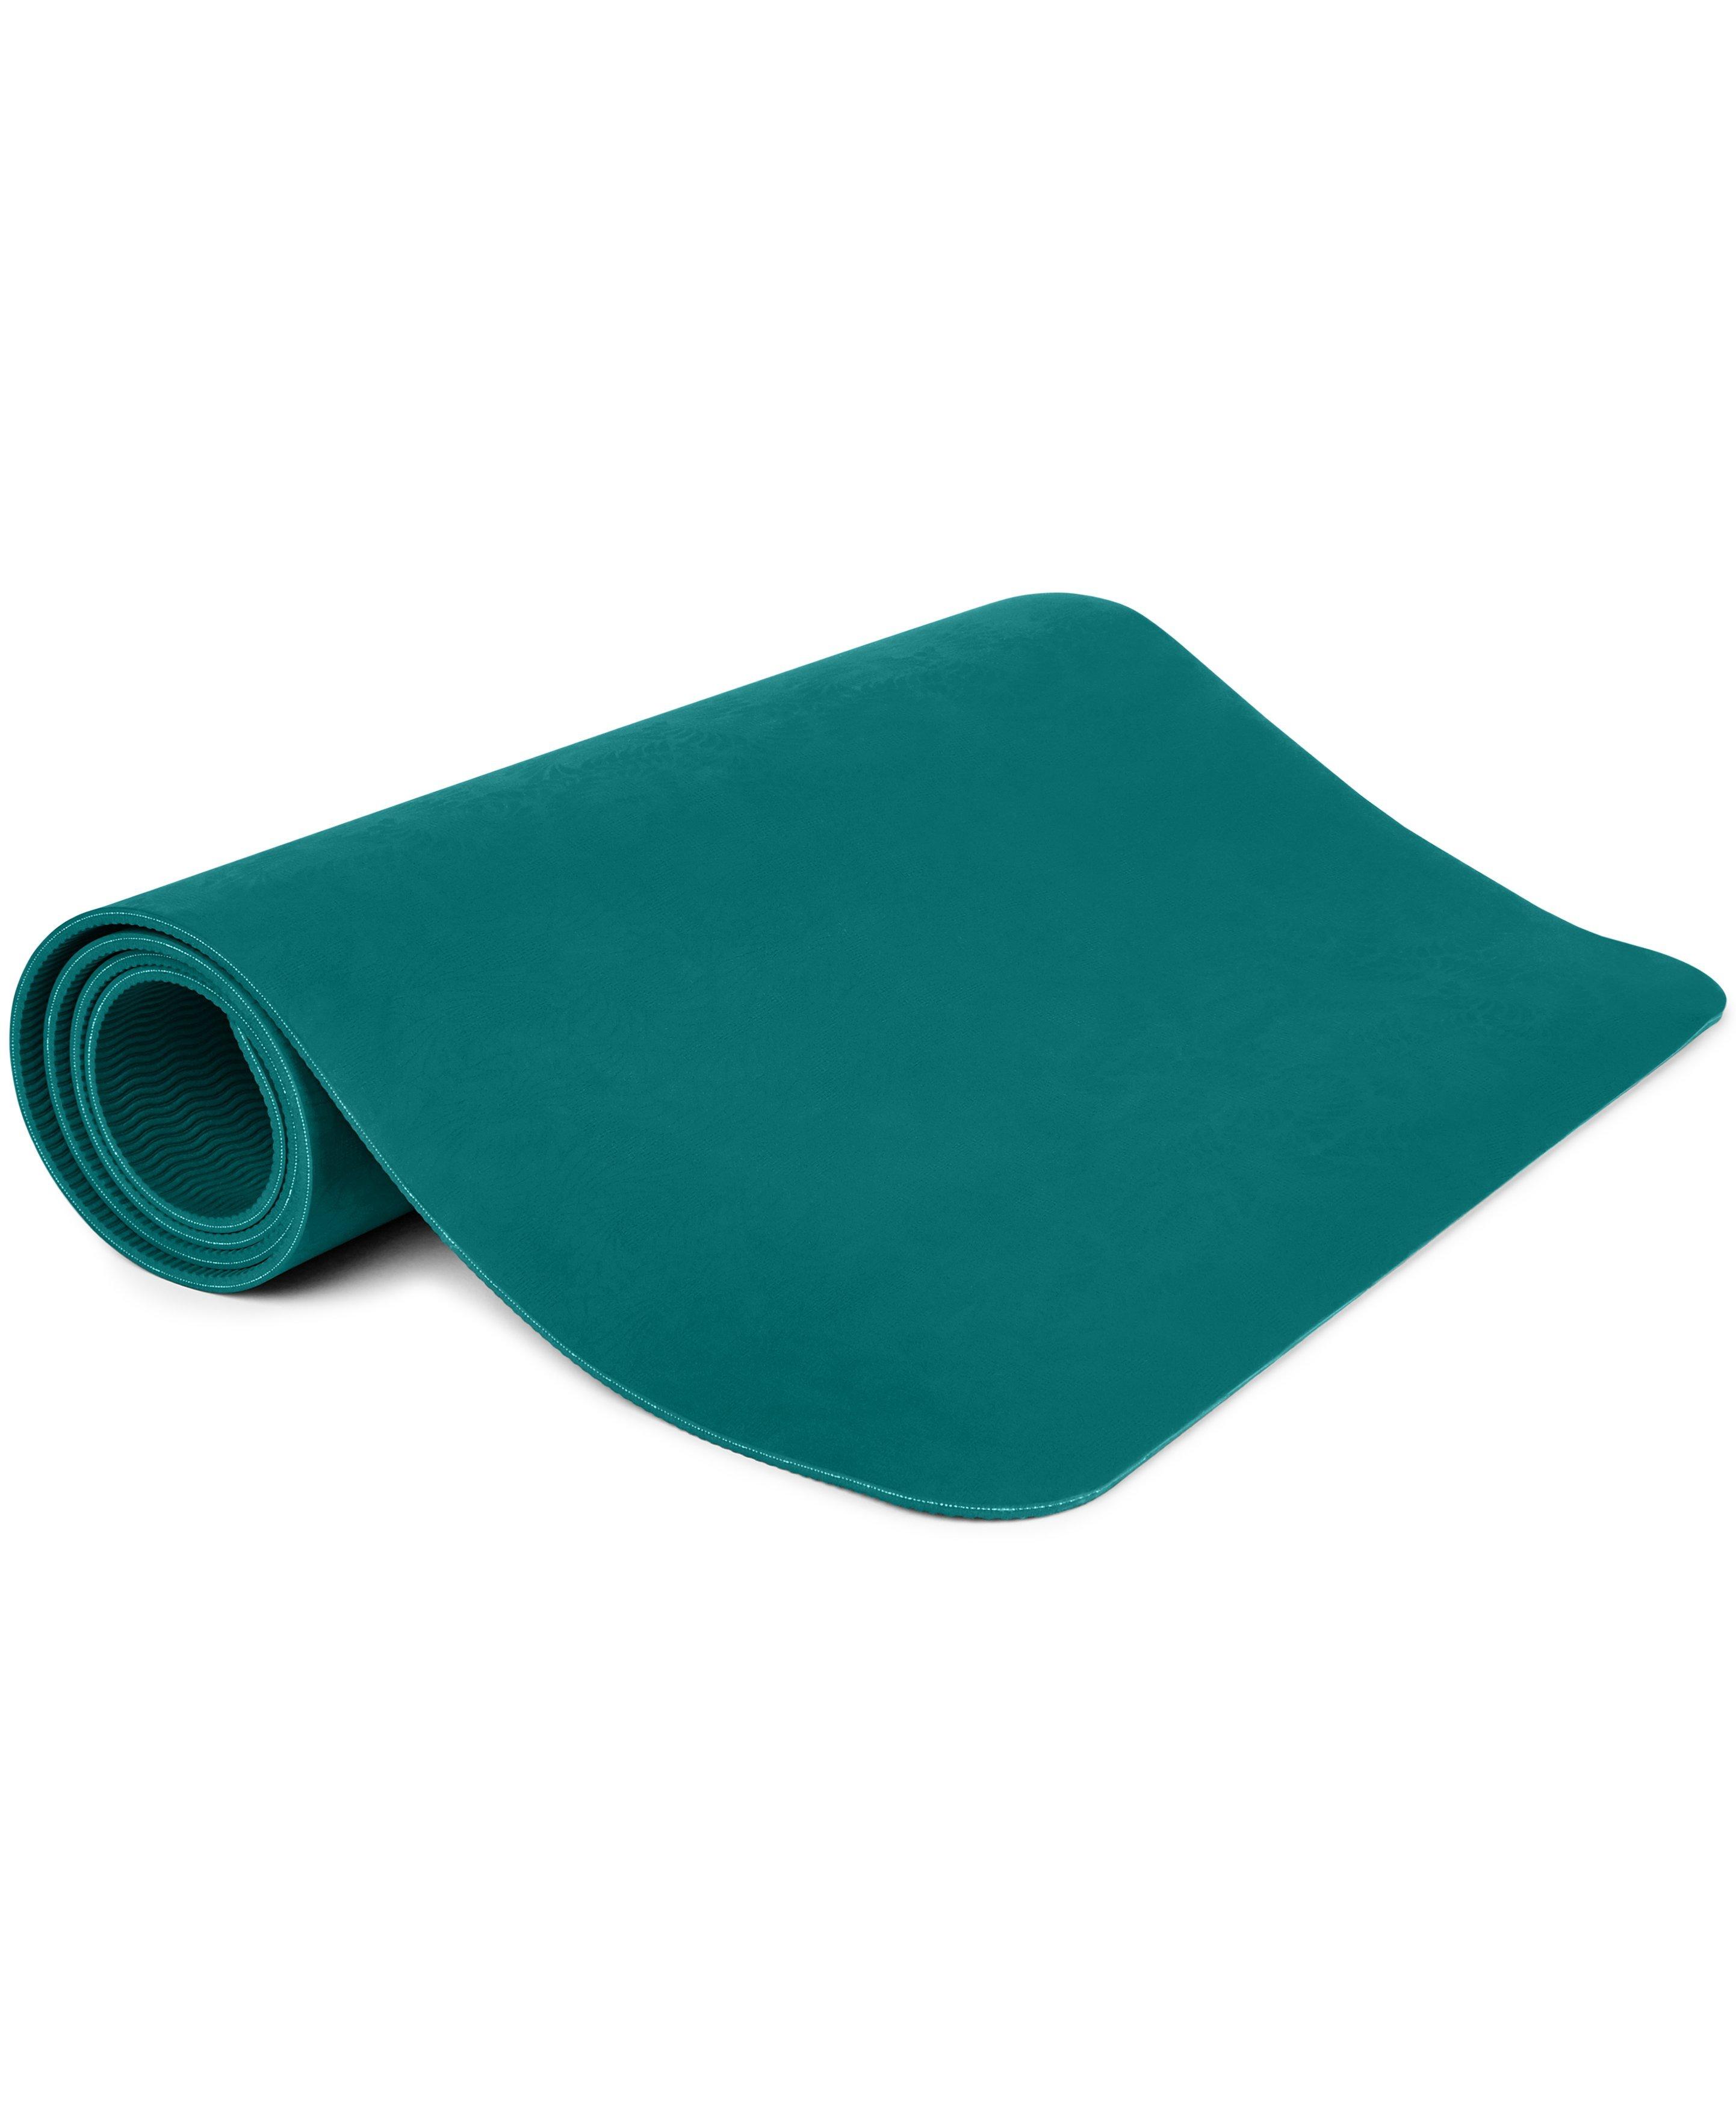 sweaty betty yoga towel